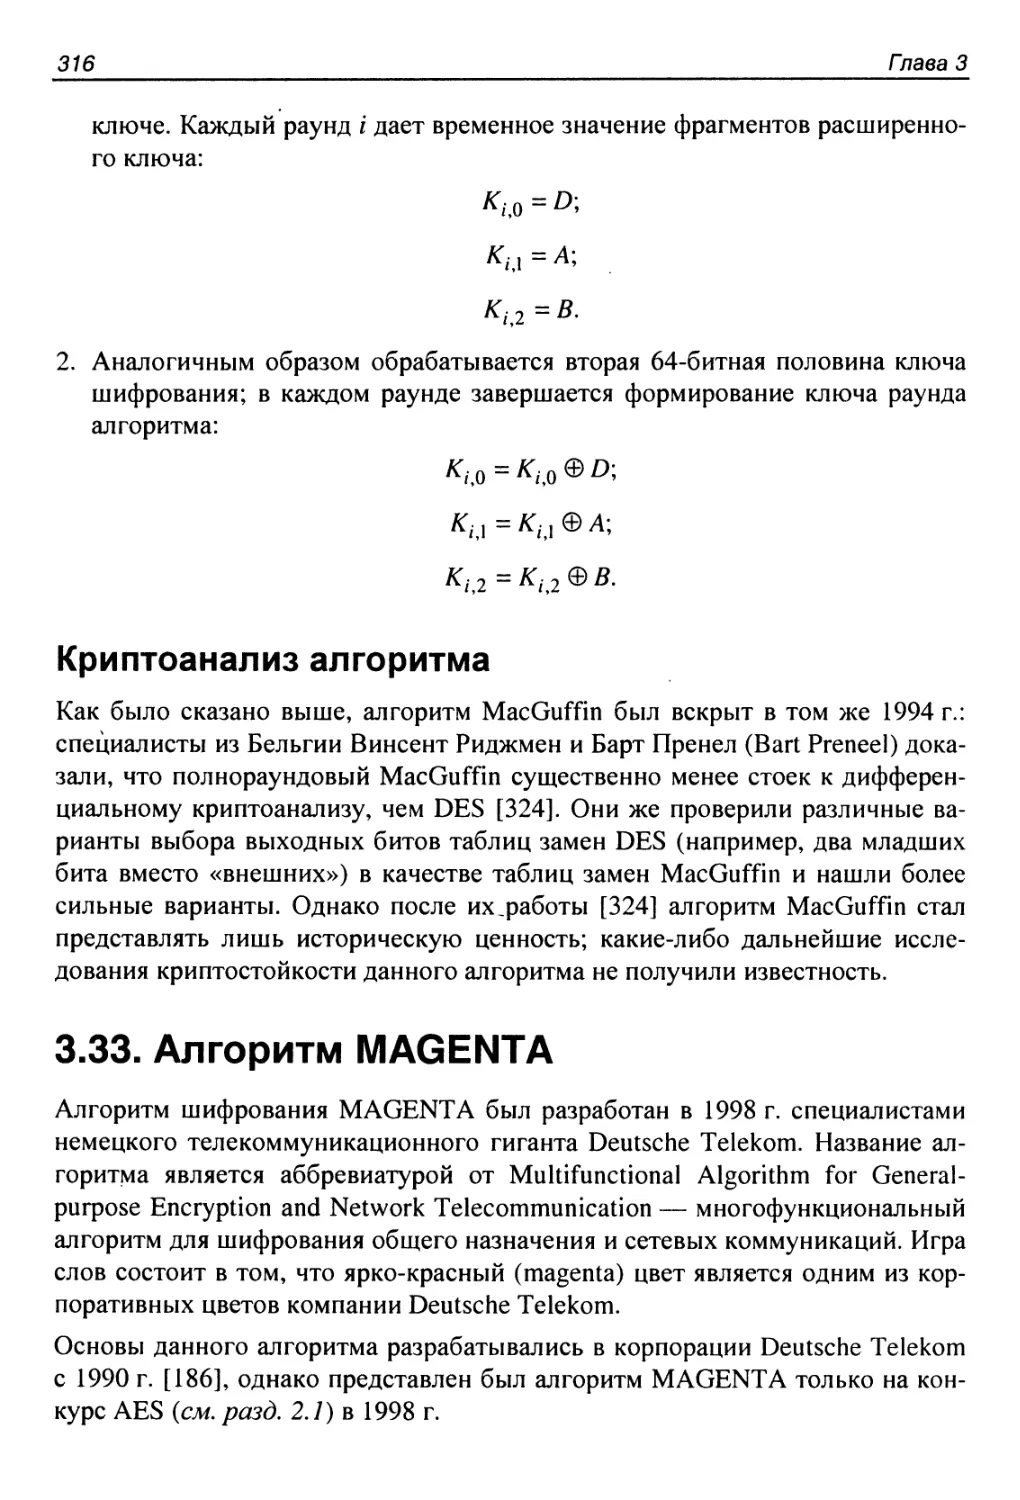 Криптоанализ алгоритма
3.33. Алгоритм MAGENTA